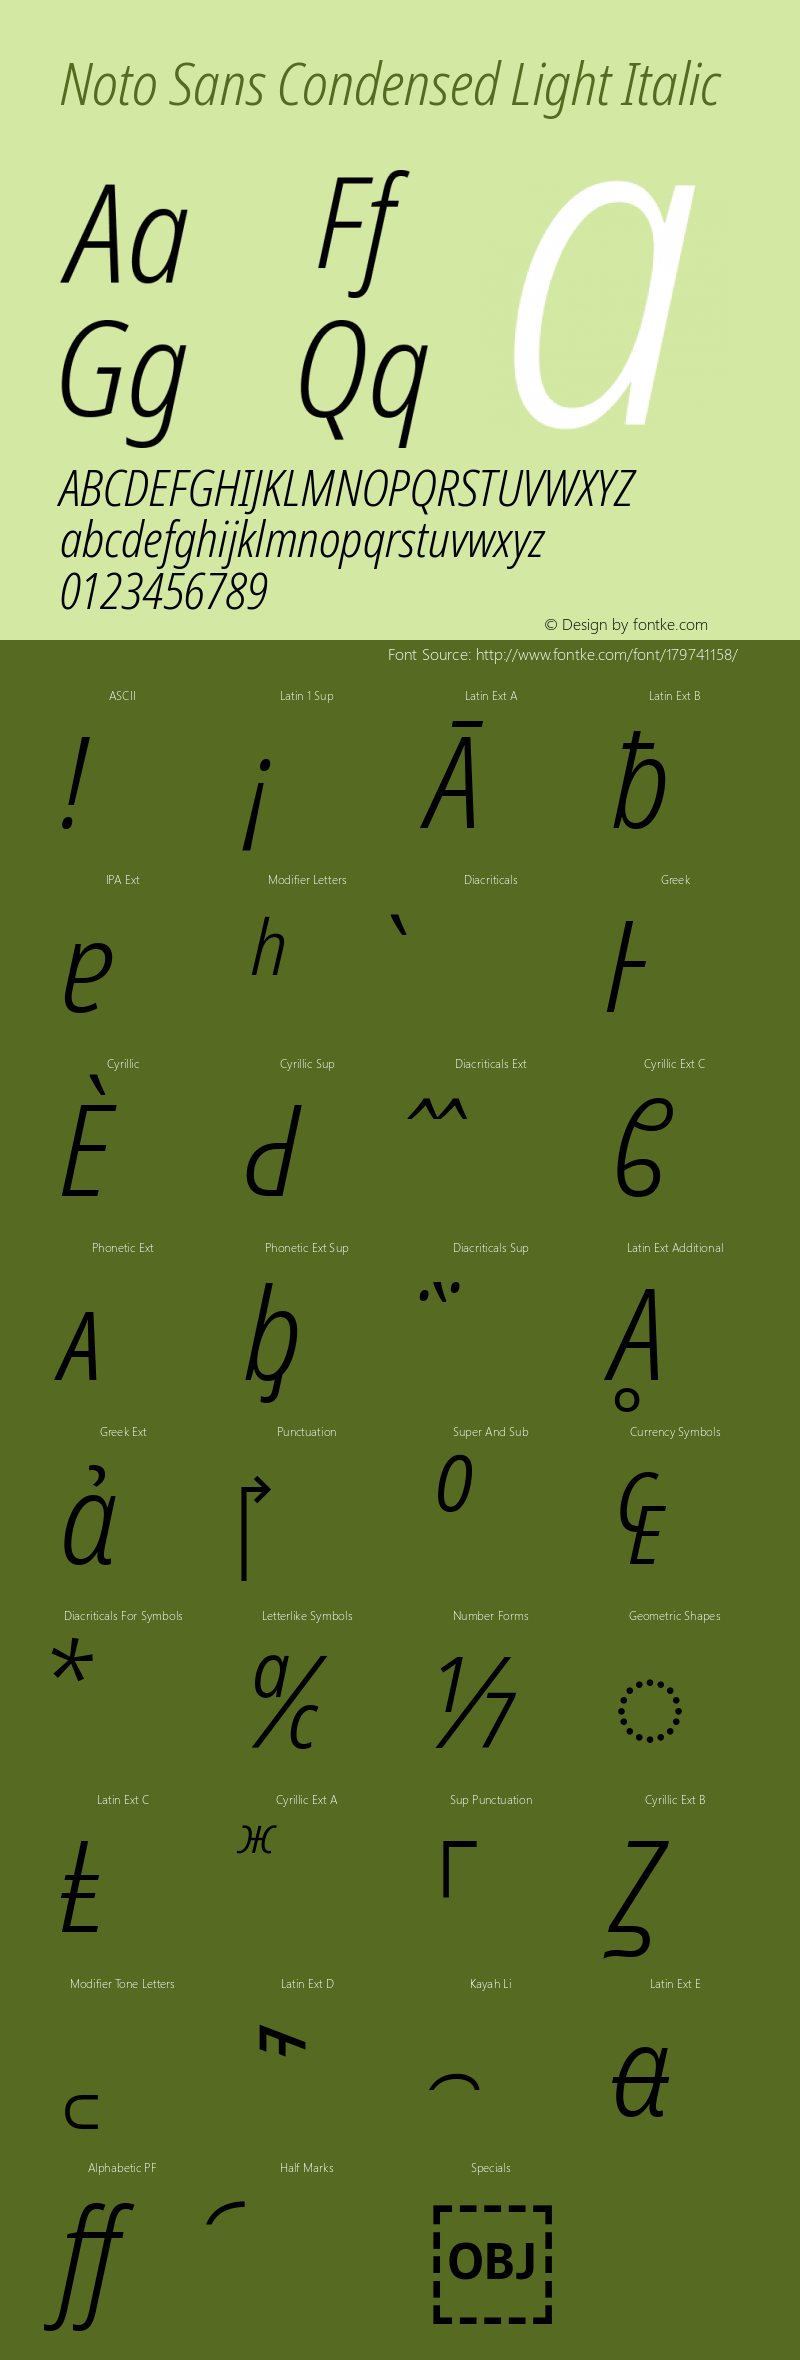 Noto Sans Condensed Light Italic Version 2.005; ttfautohint (v1.8.4) -l 8 -r 50 -G 200 -x 14 -D latn -f none -a qsq -X 